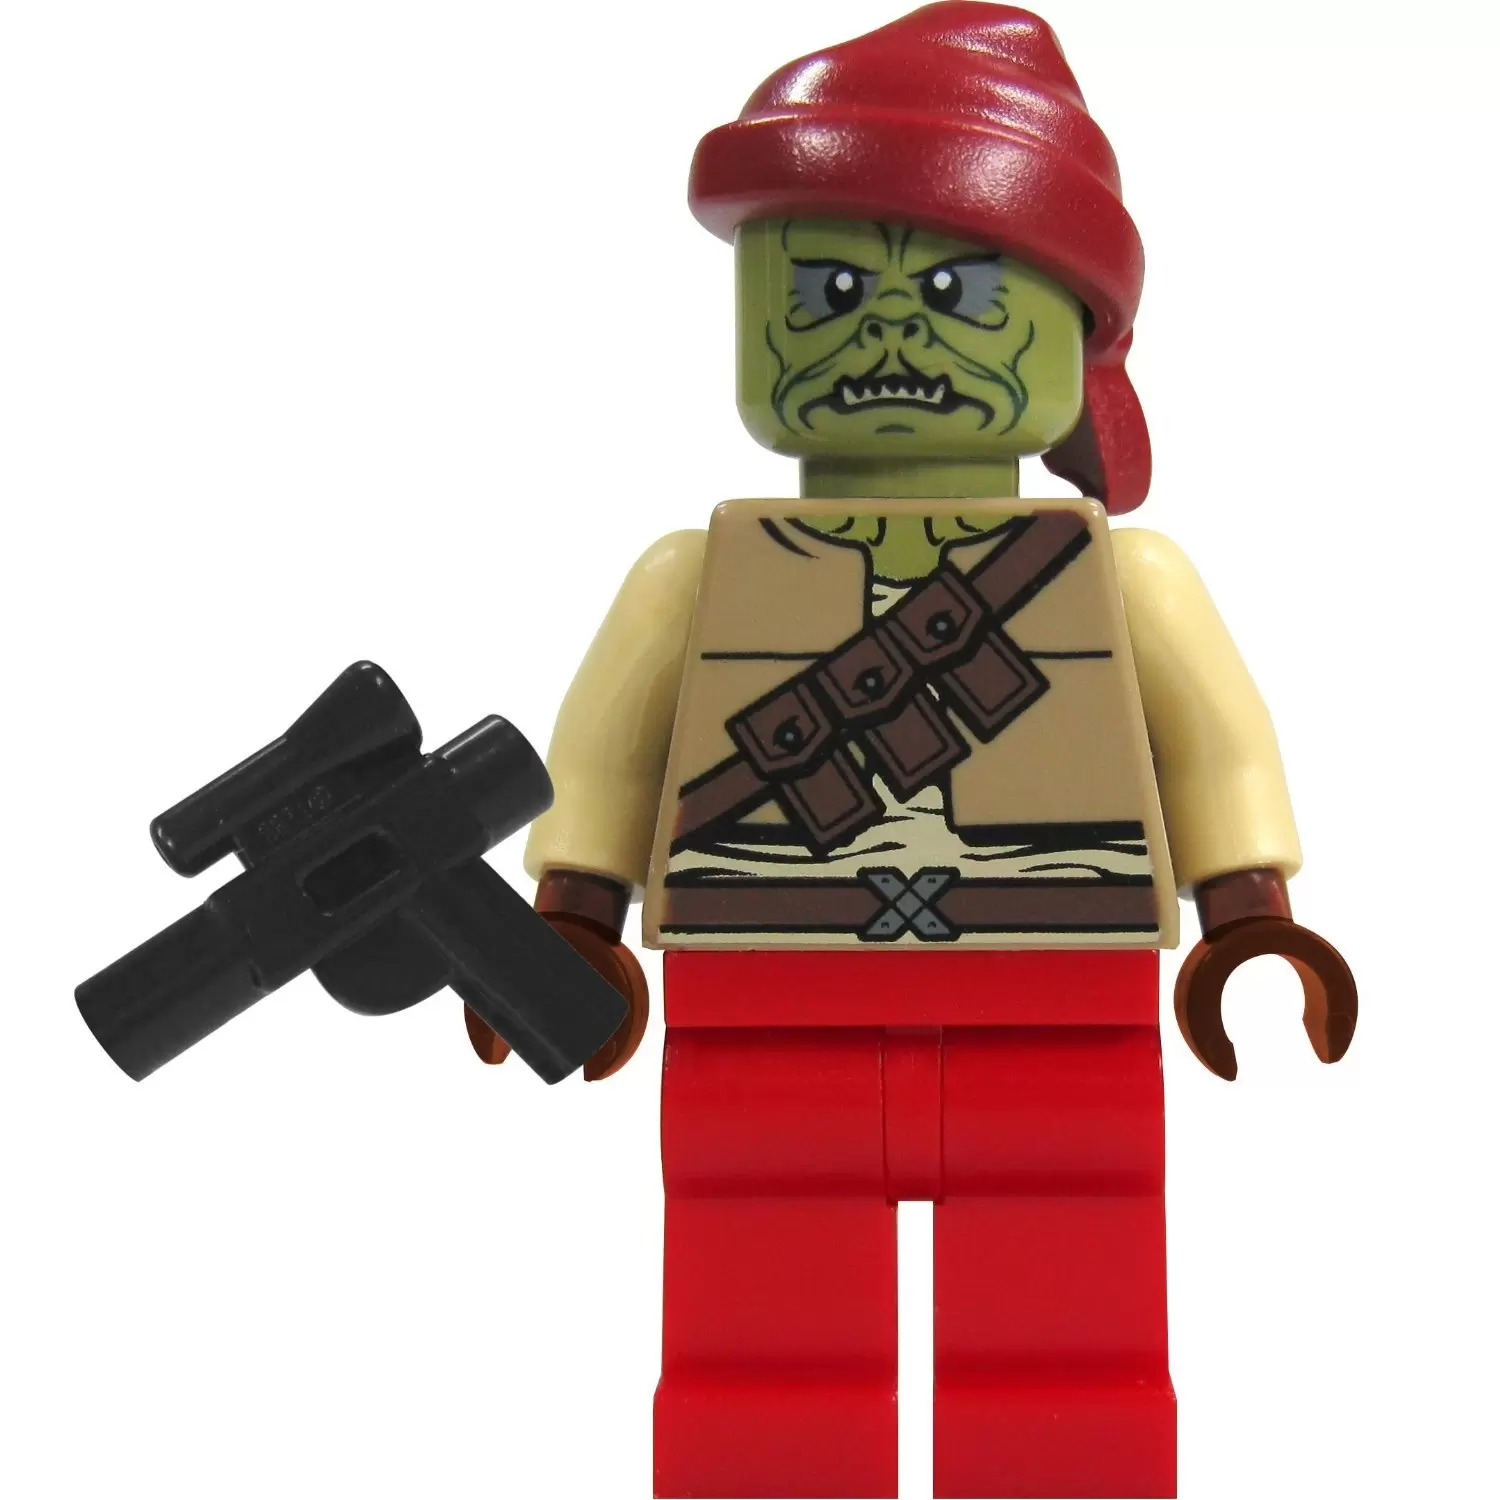 LEGO STAR WARS Minifigure KITHABA From Set 9496 